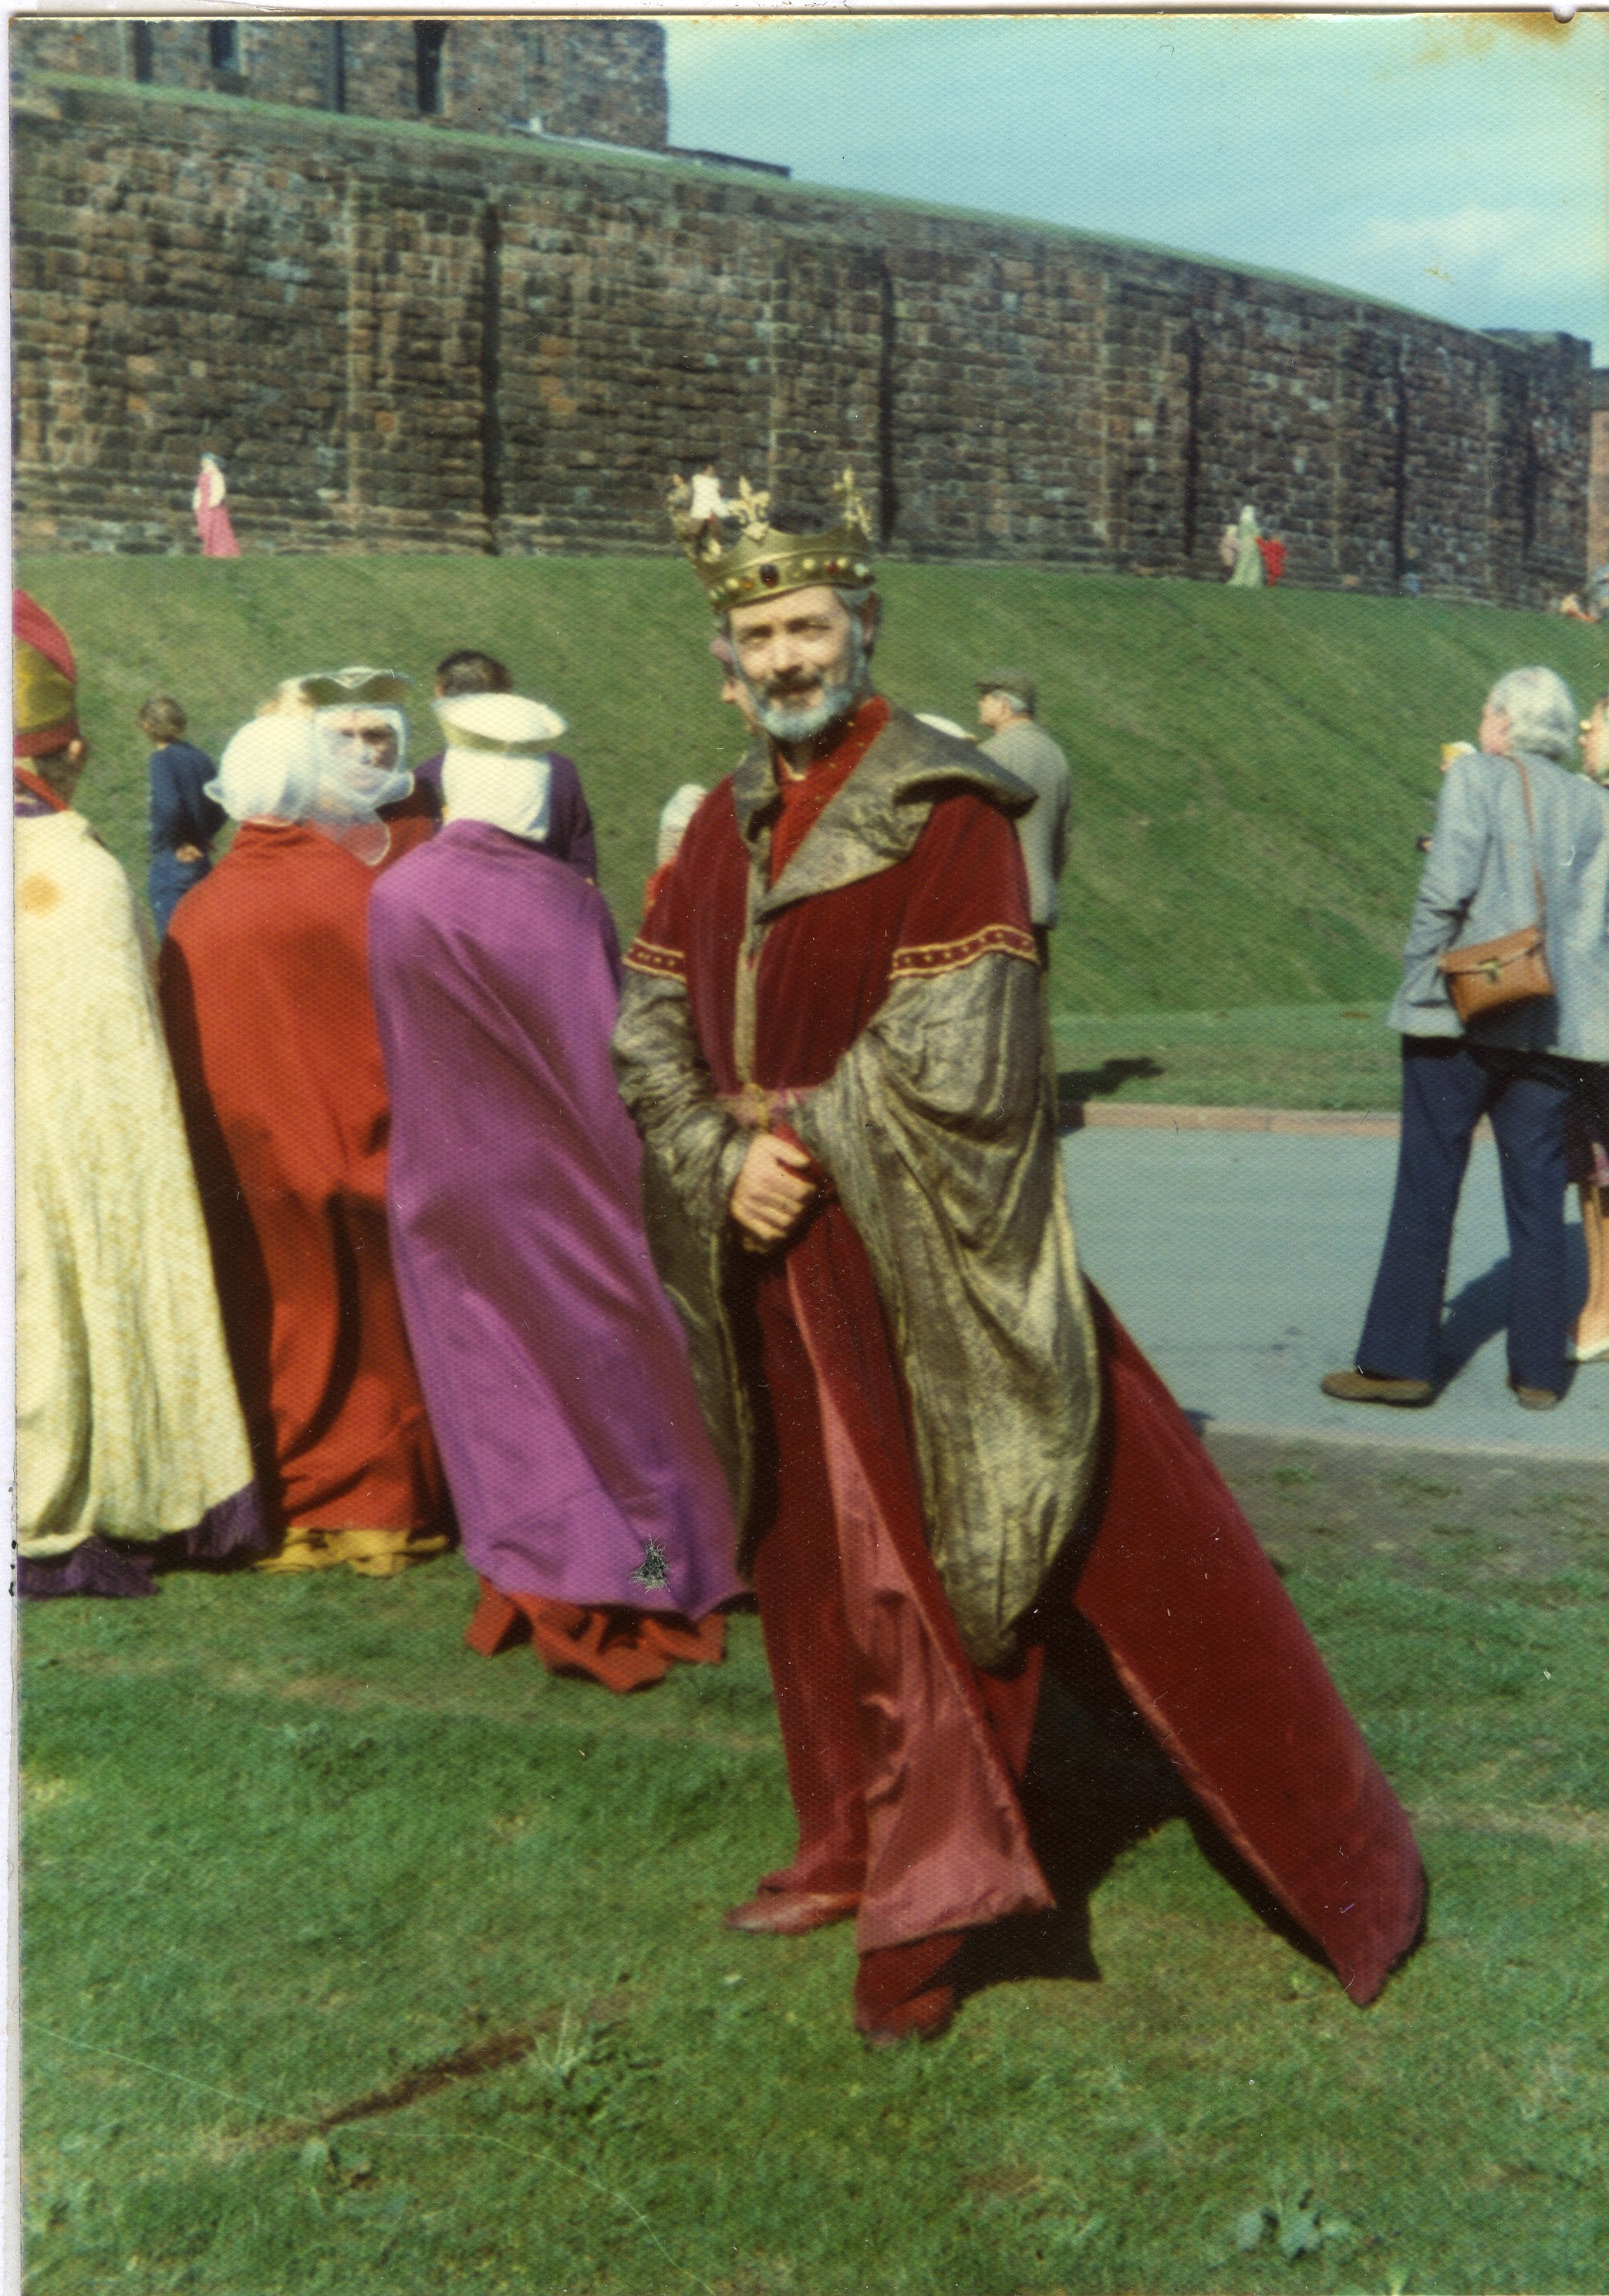 Elliott Hall as Edward I in the Carlisle Pageant, 1977